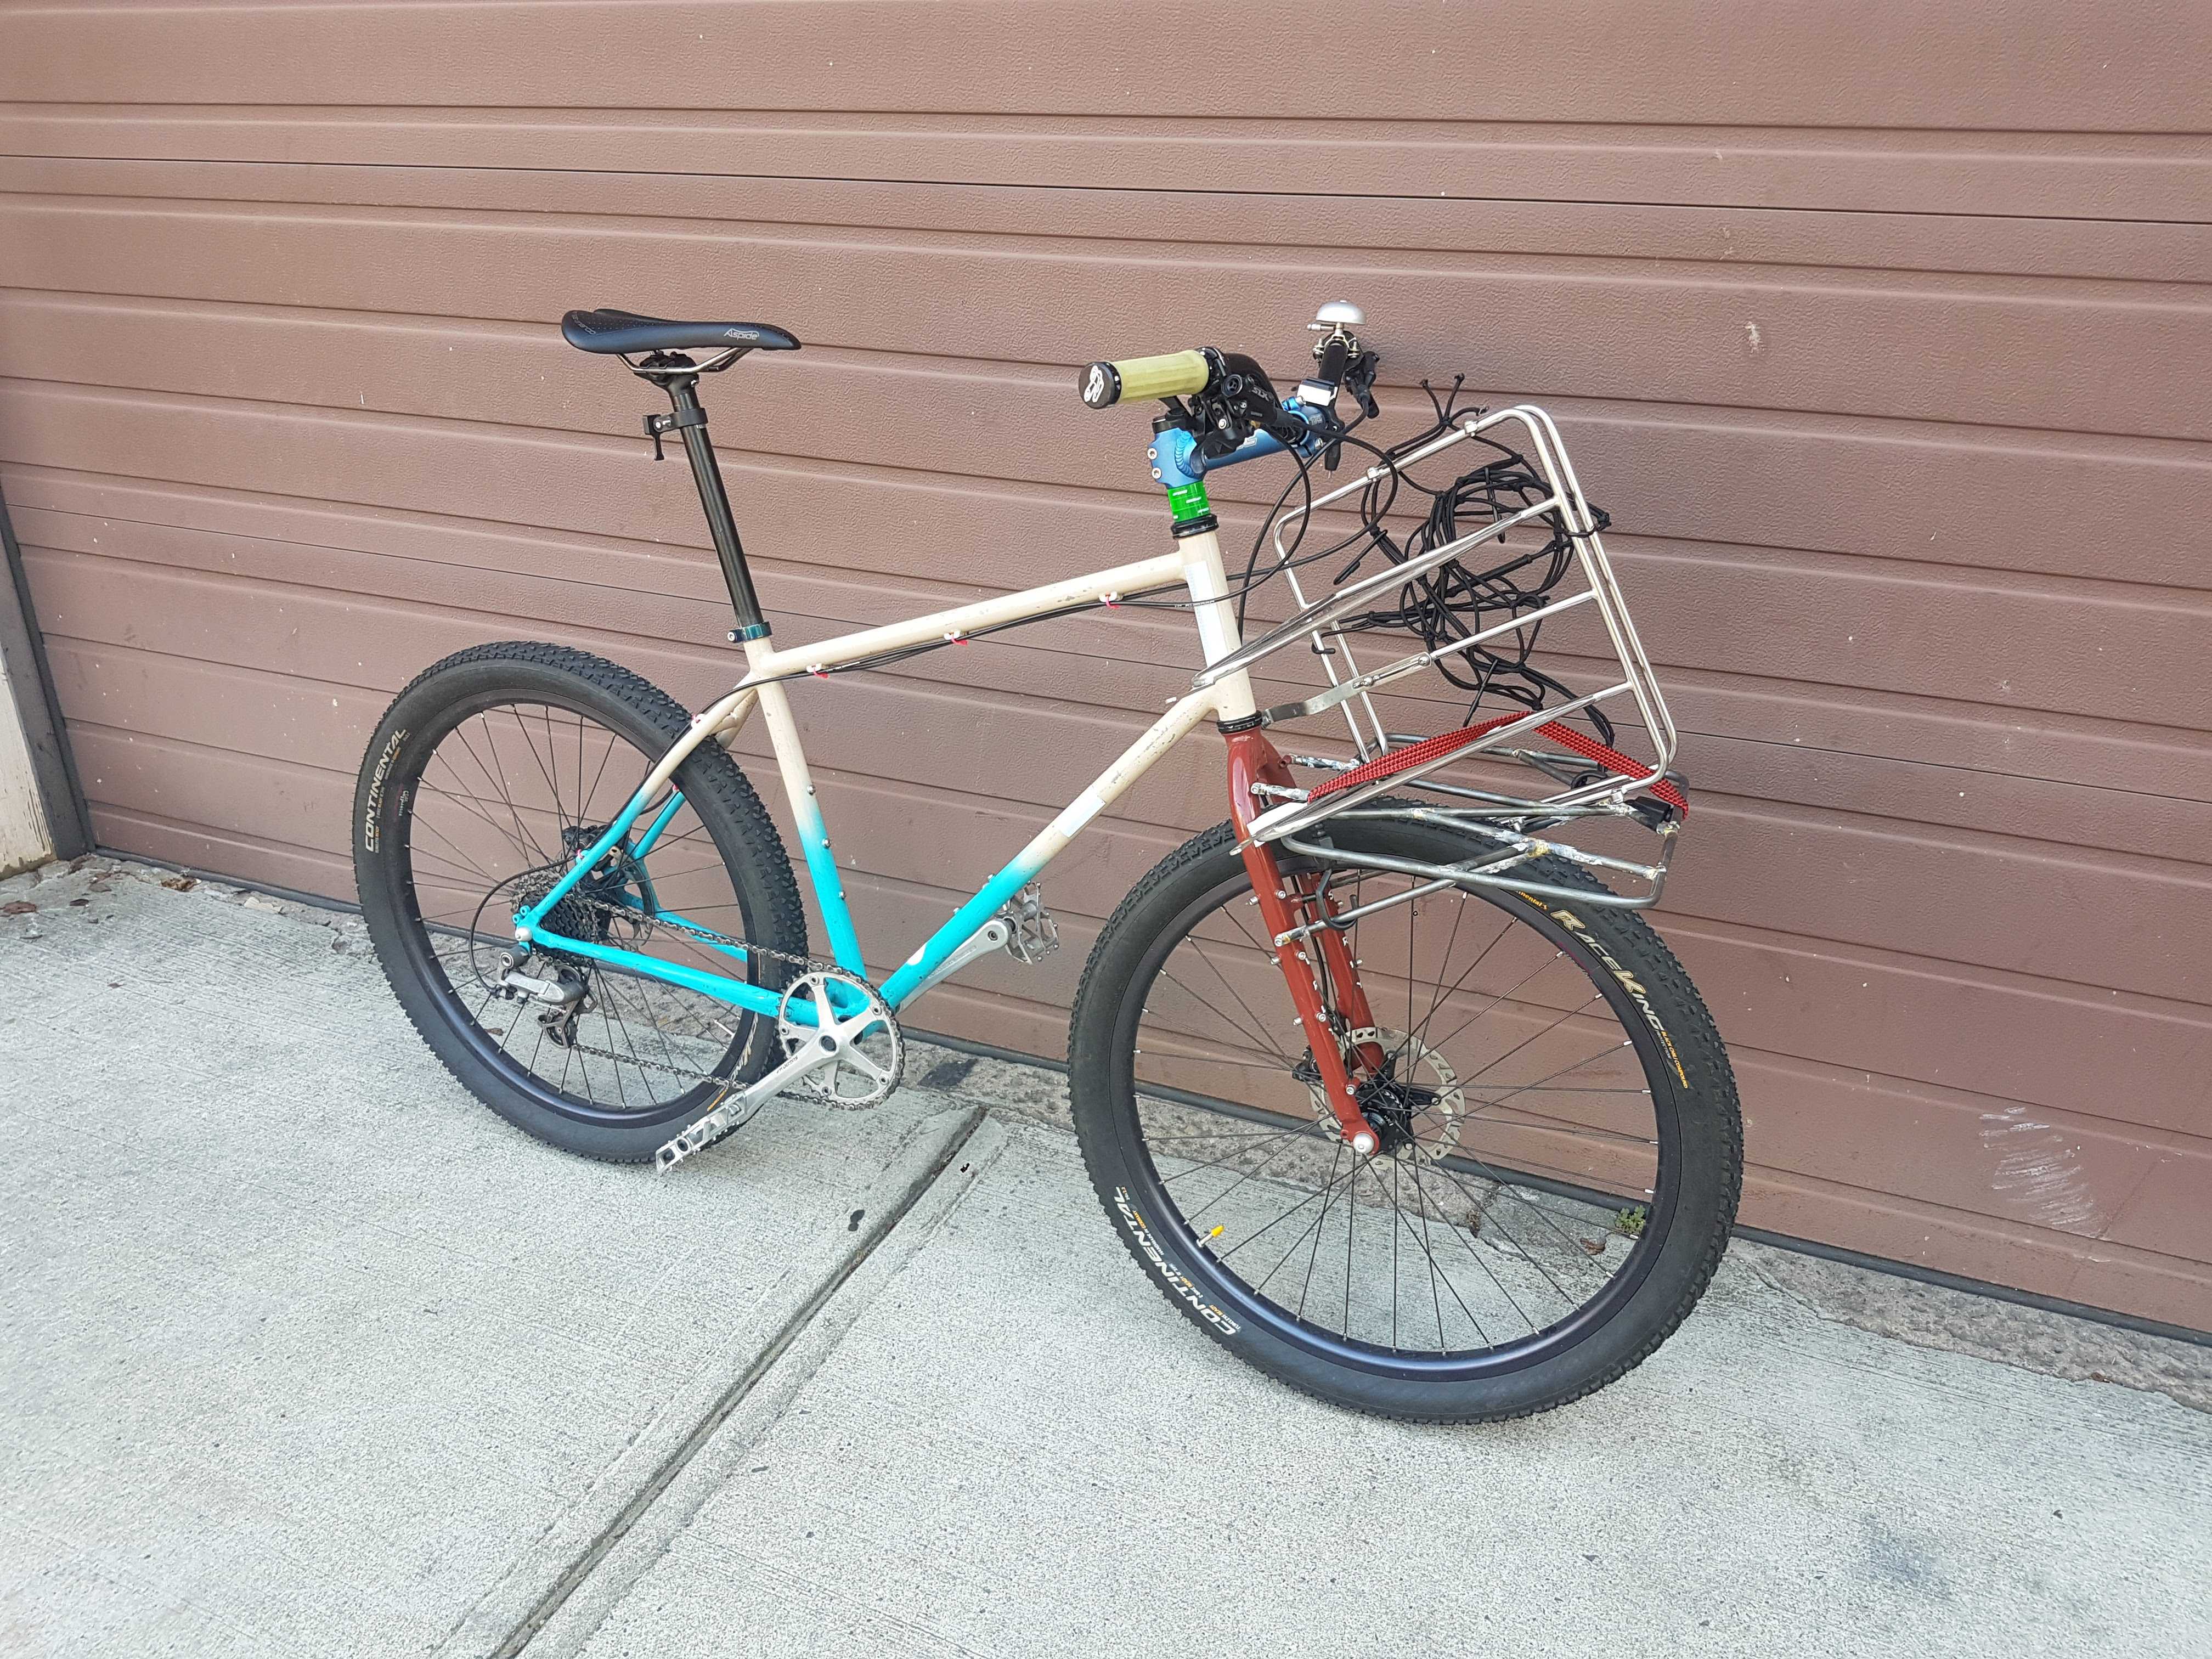 Porteur-Style 24-Pack Bike Rack